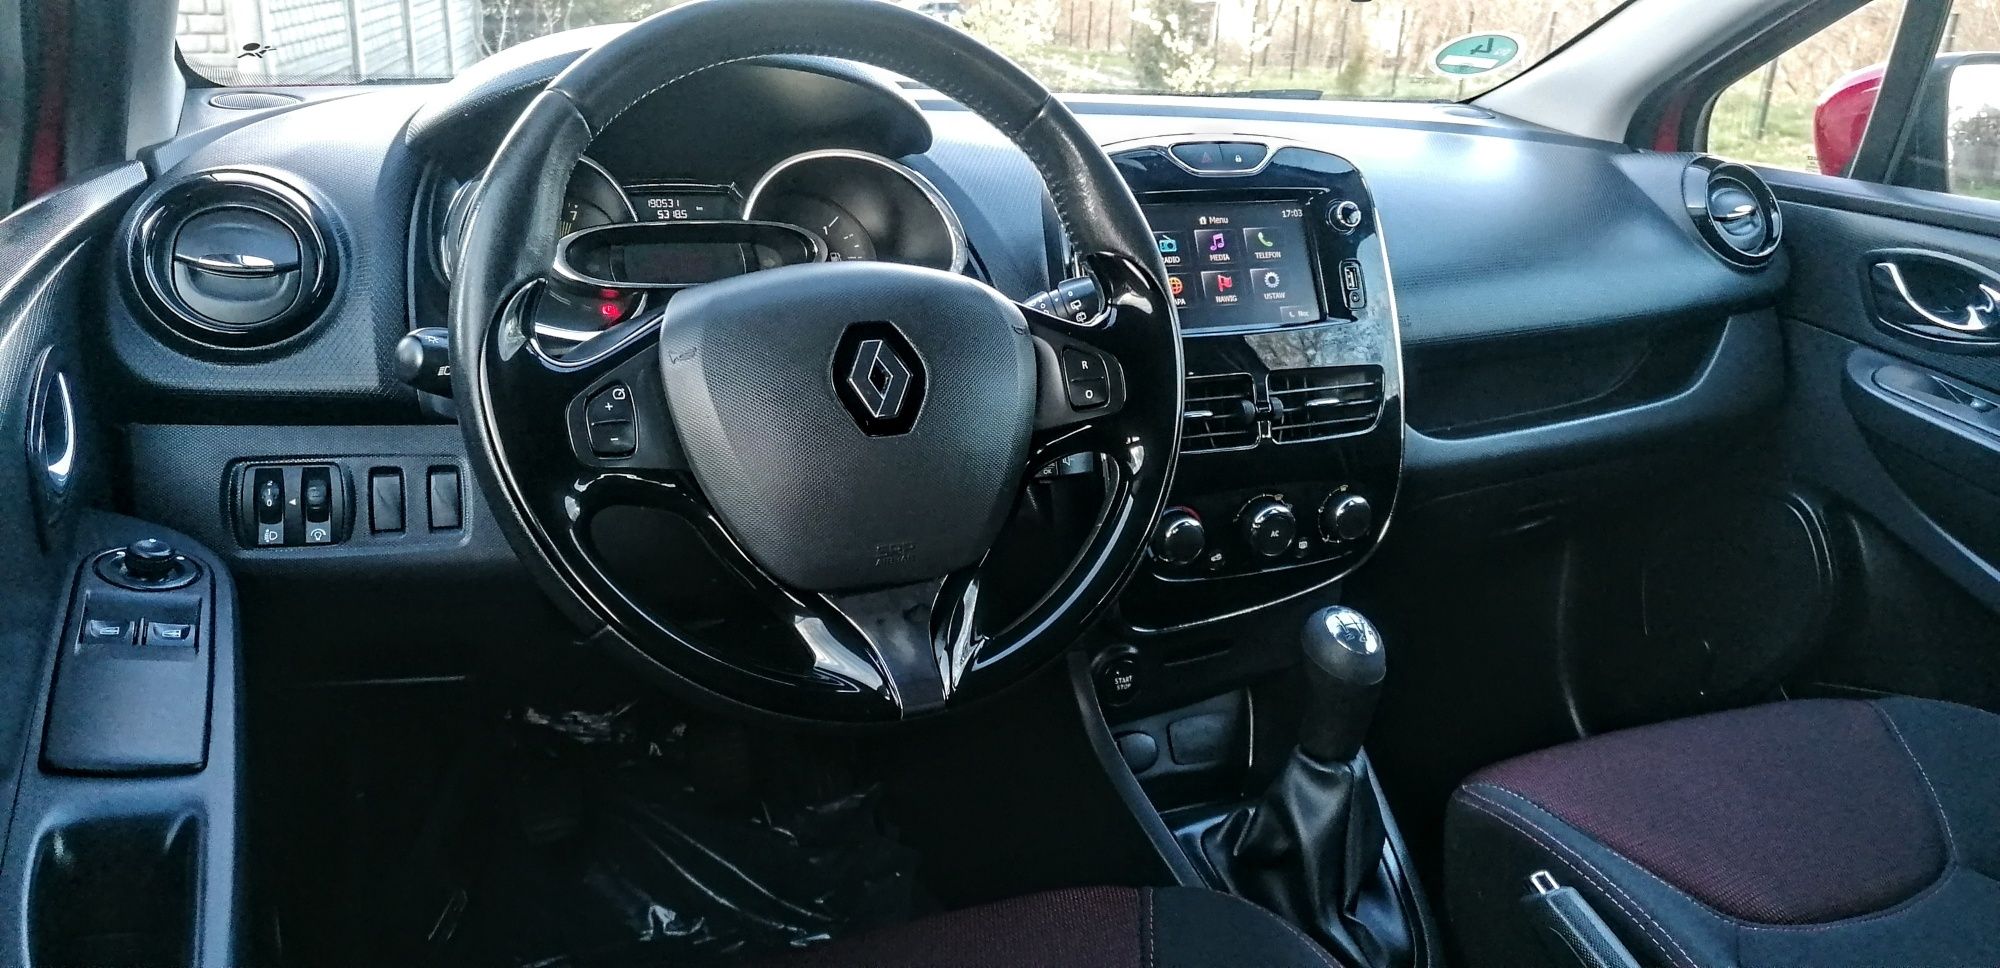 Renault CLIO IV 1.2B 16V bardzo zadbana prosto z Niemiec